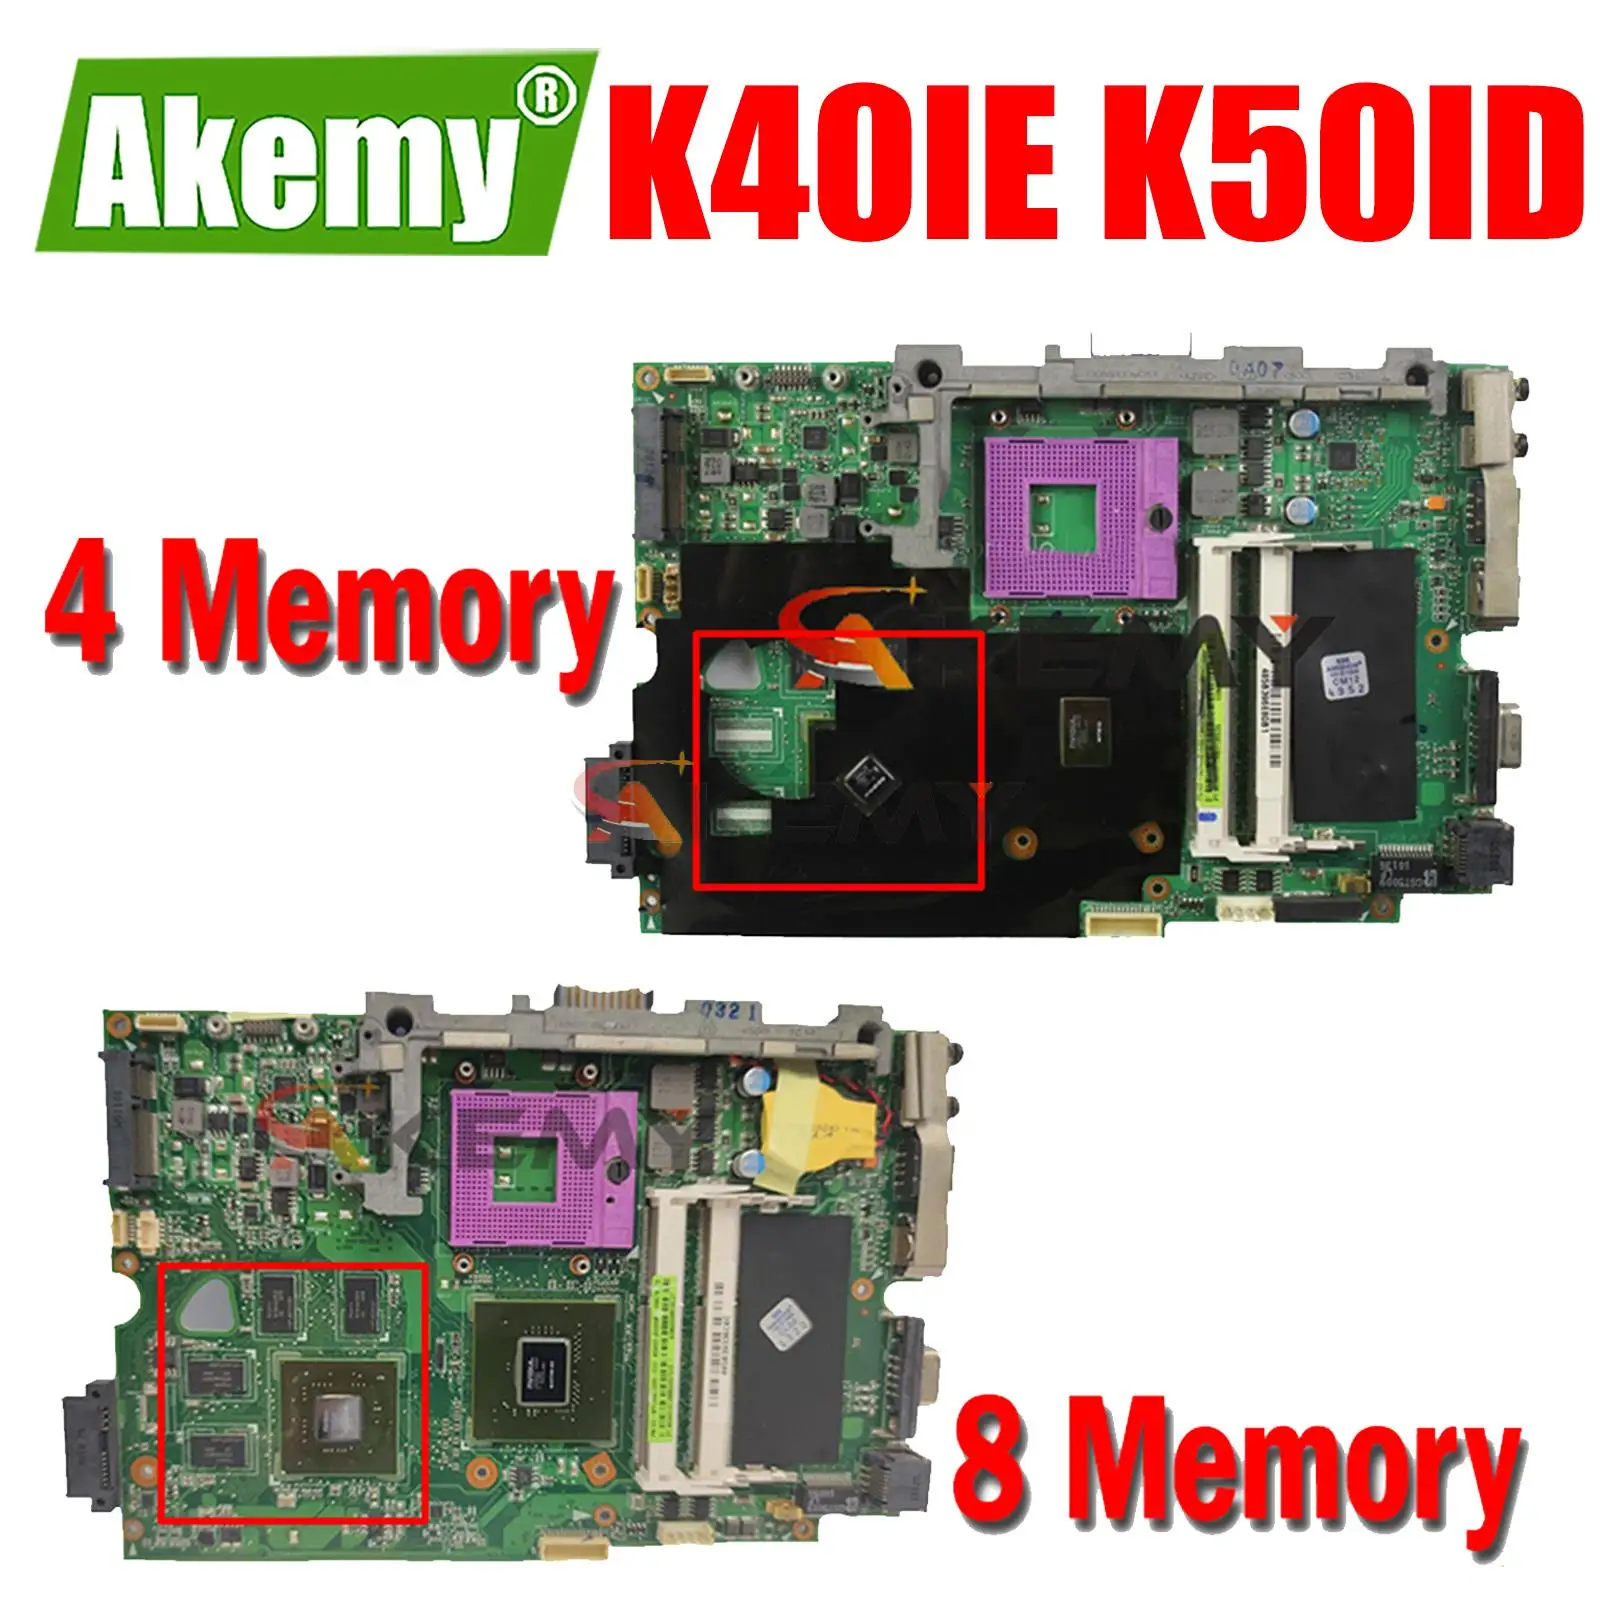 

K40IE K50ID Laptop Motherboard for ASUS K40IE X5DI K50IE K50I K50ID Notebook Mainboard Motherboard 8 Memory 4 Memory